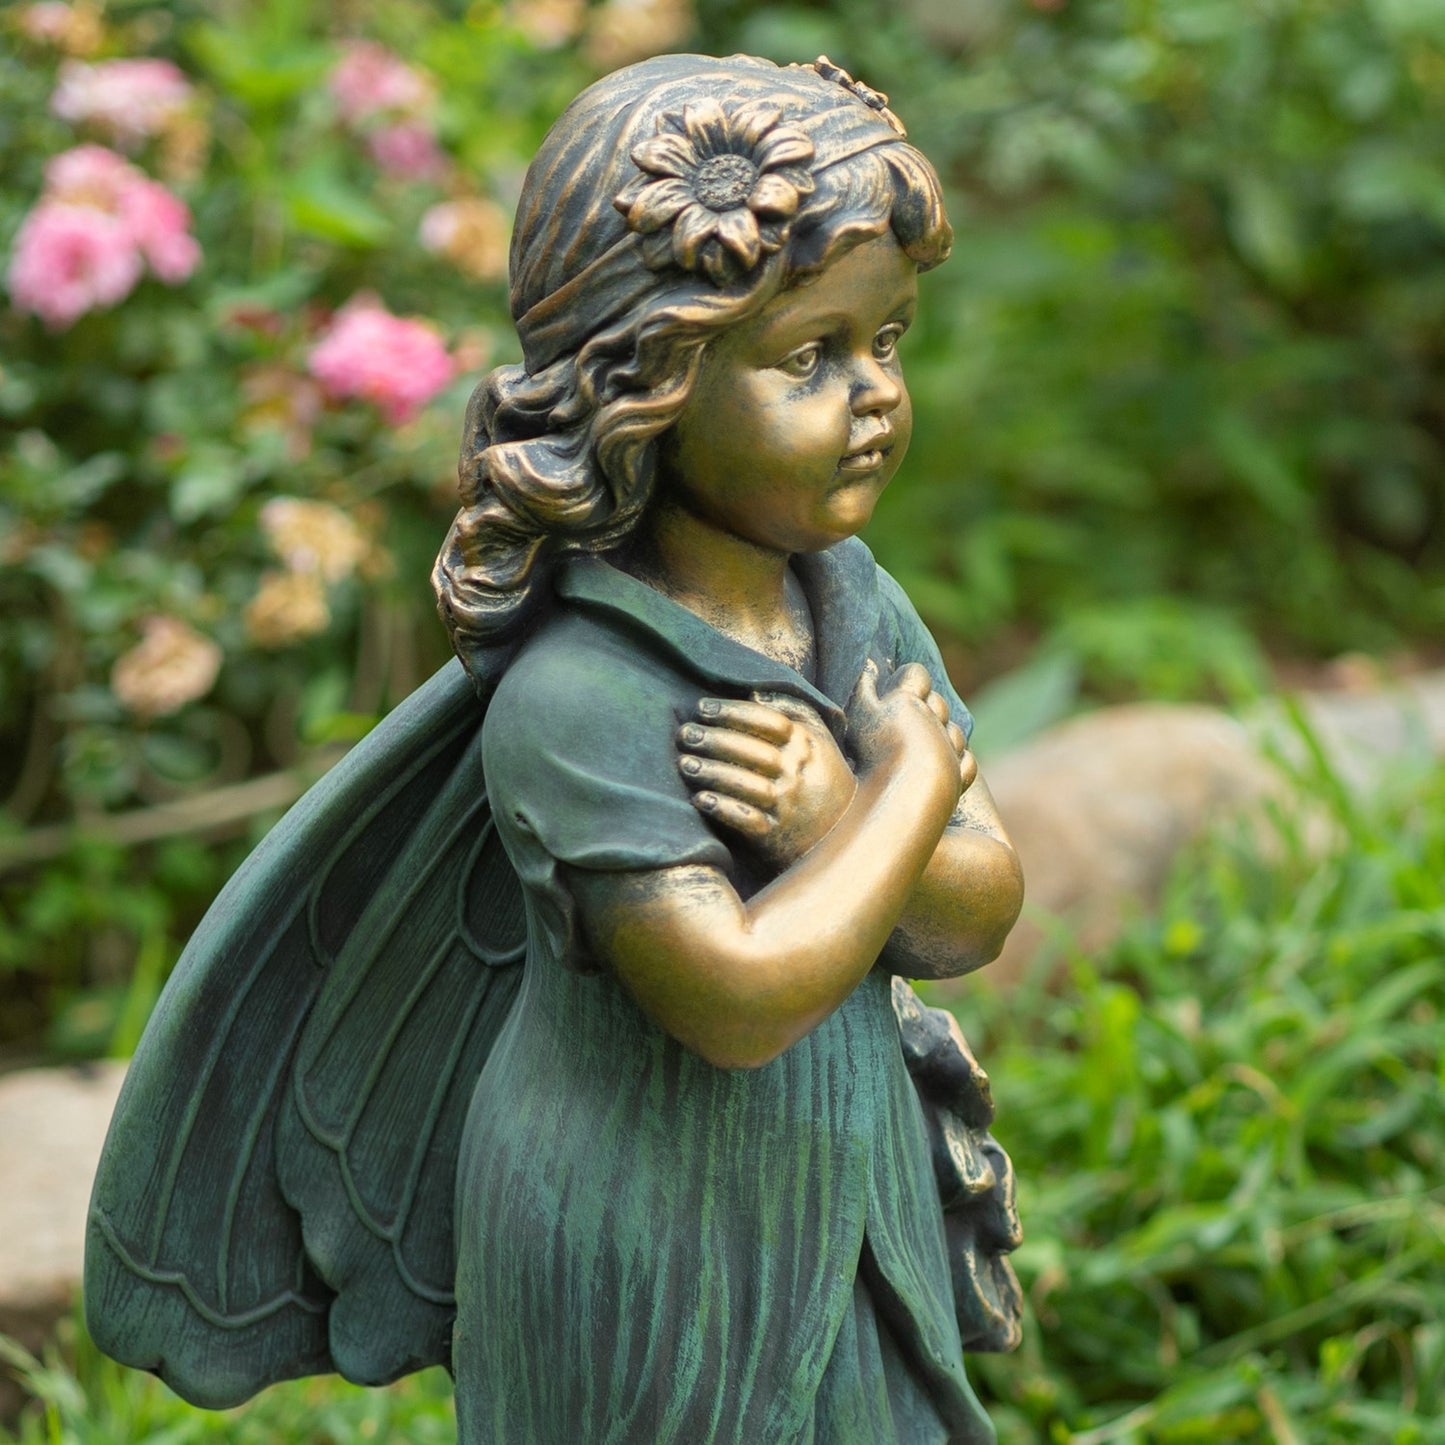 Tush - Crossing Arms Fairy Garden Statue